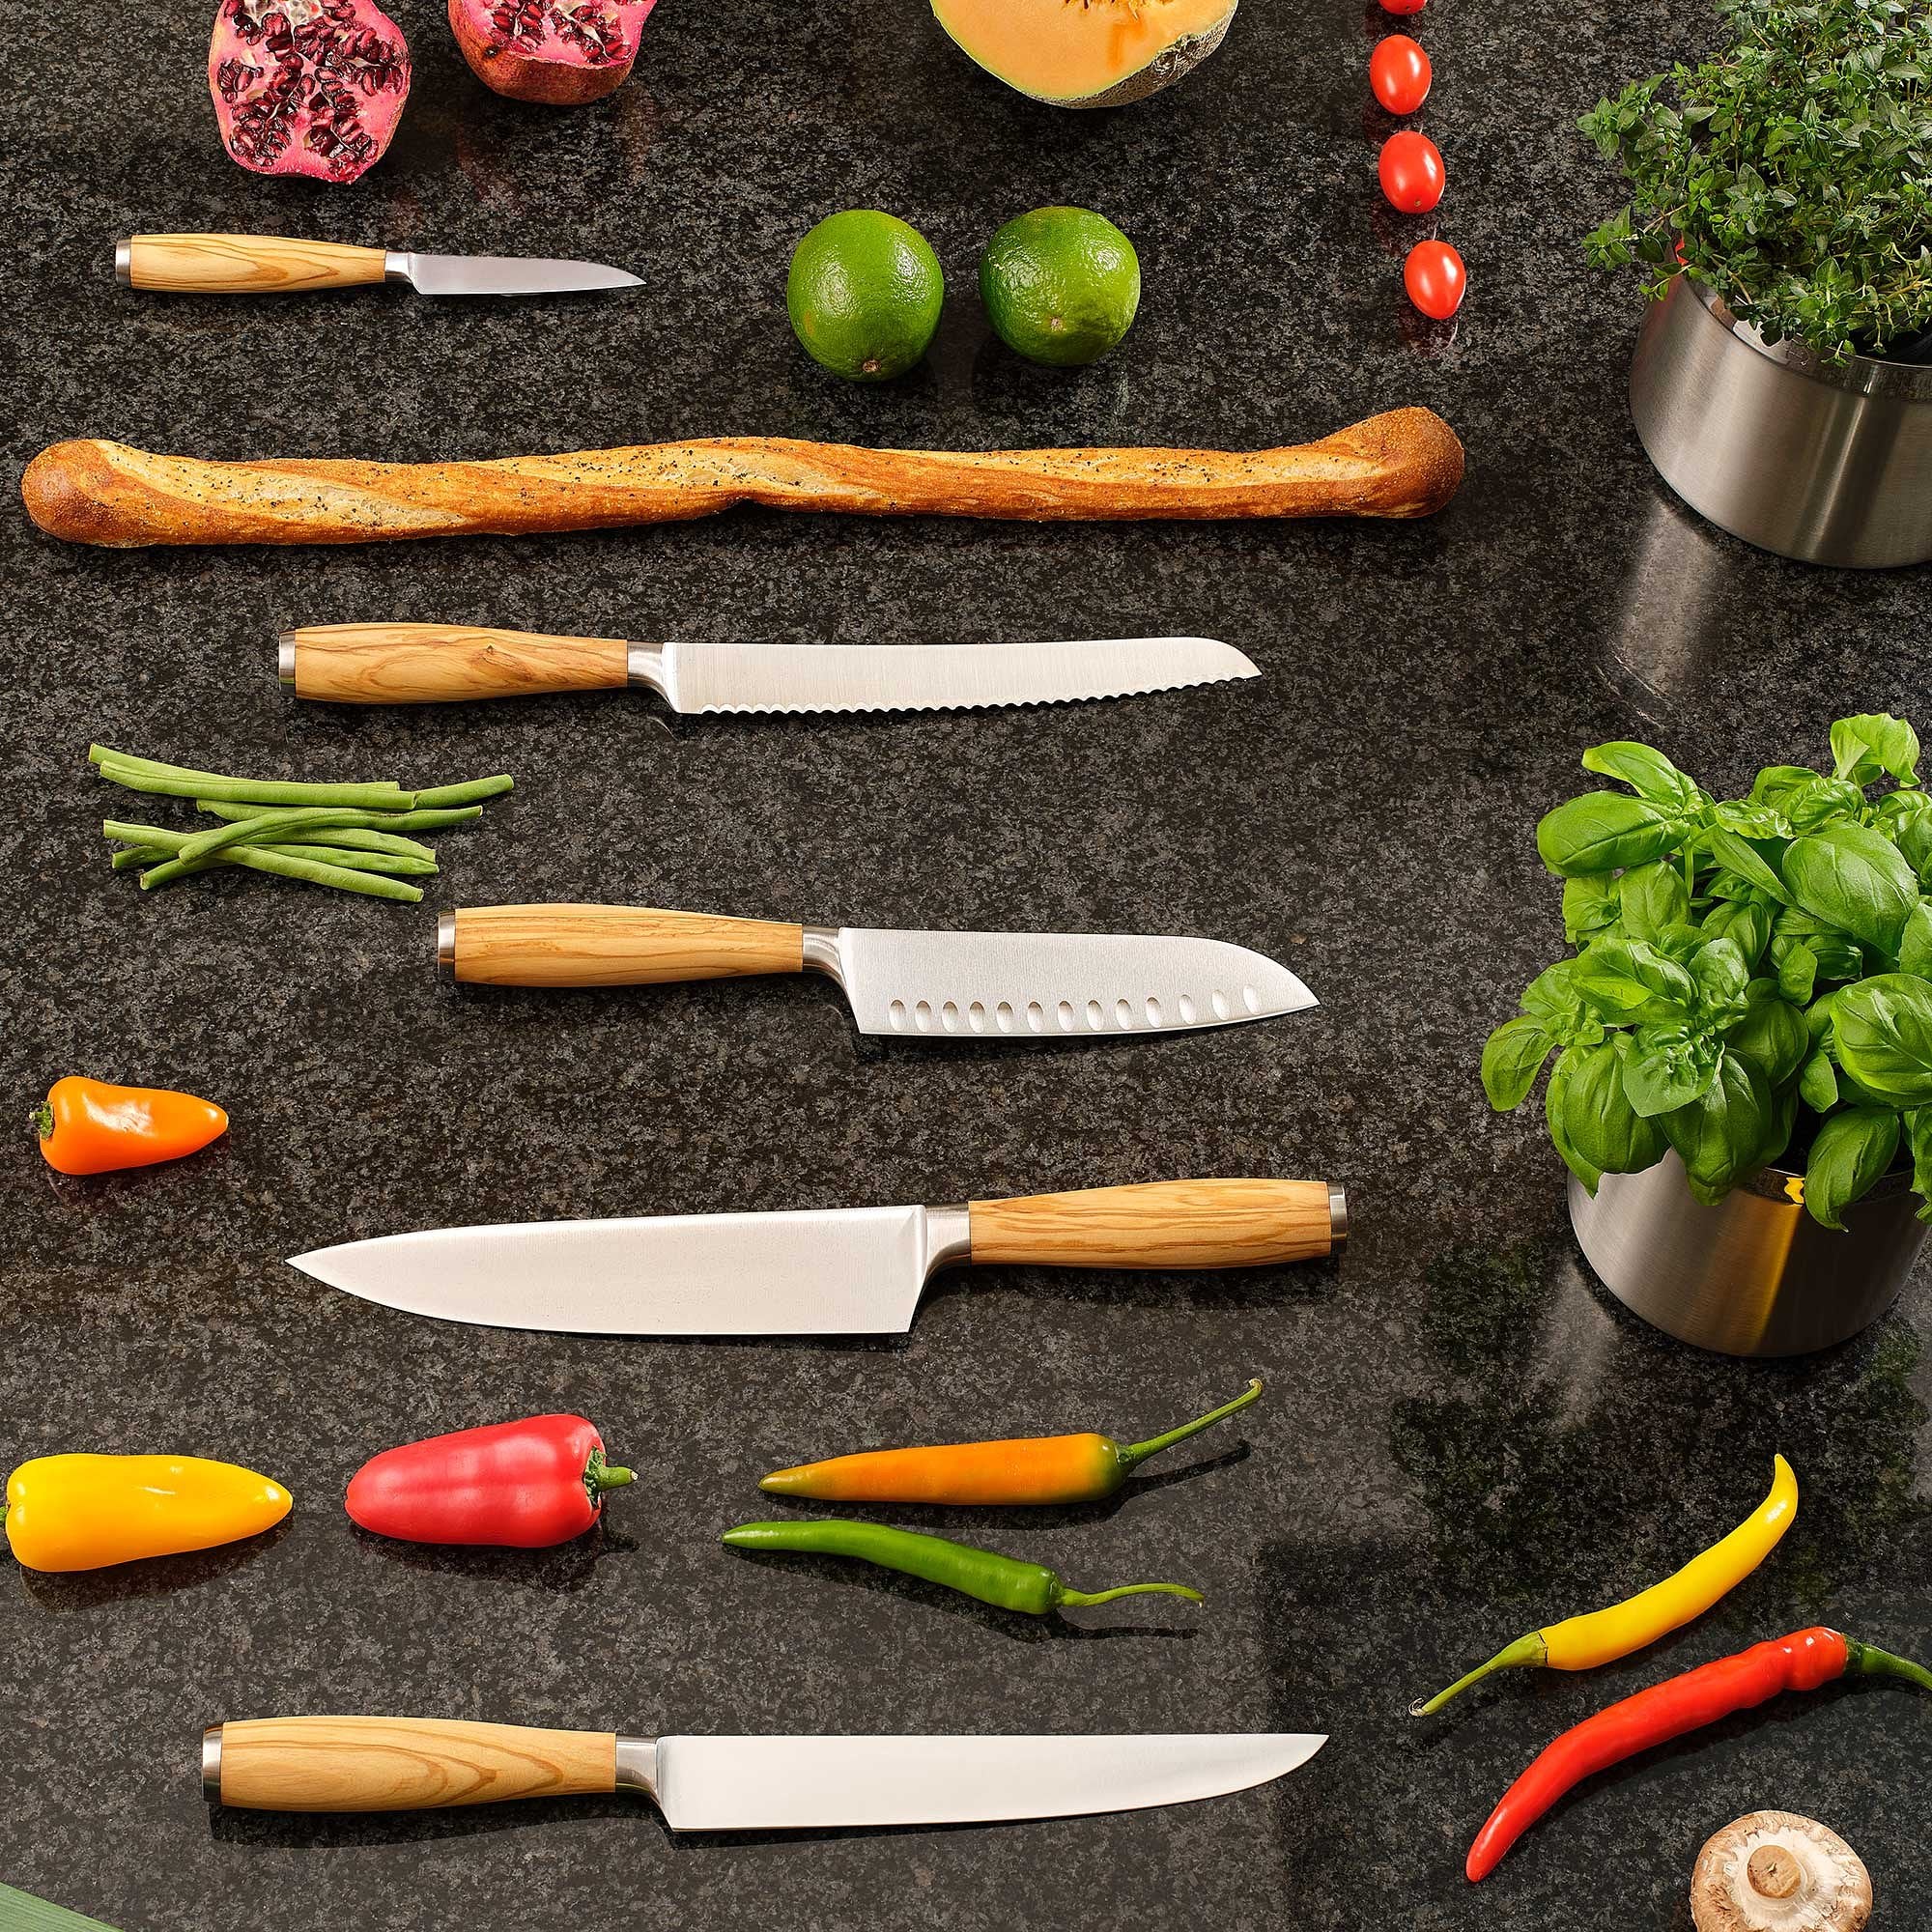 Rösle Keuken Vegetable Knife 9 cm